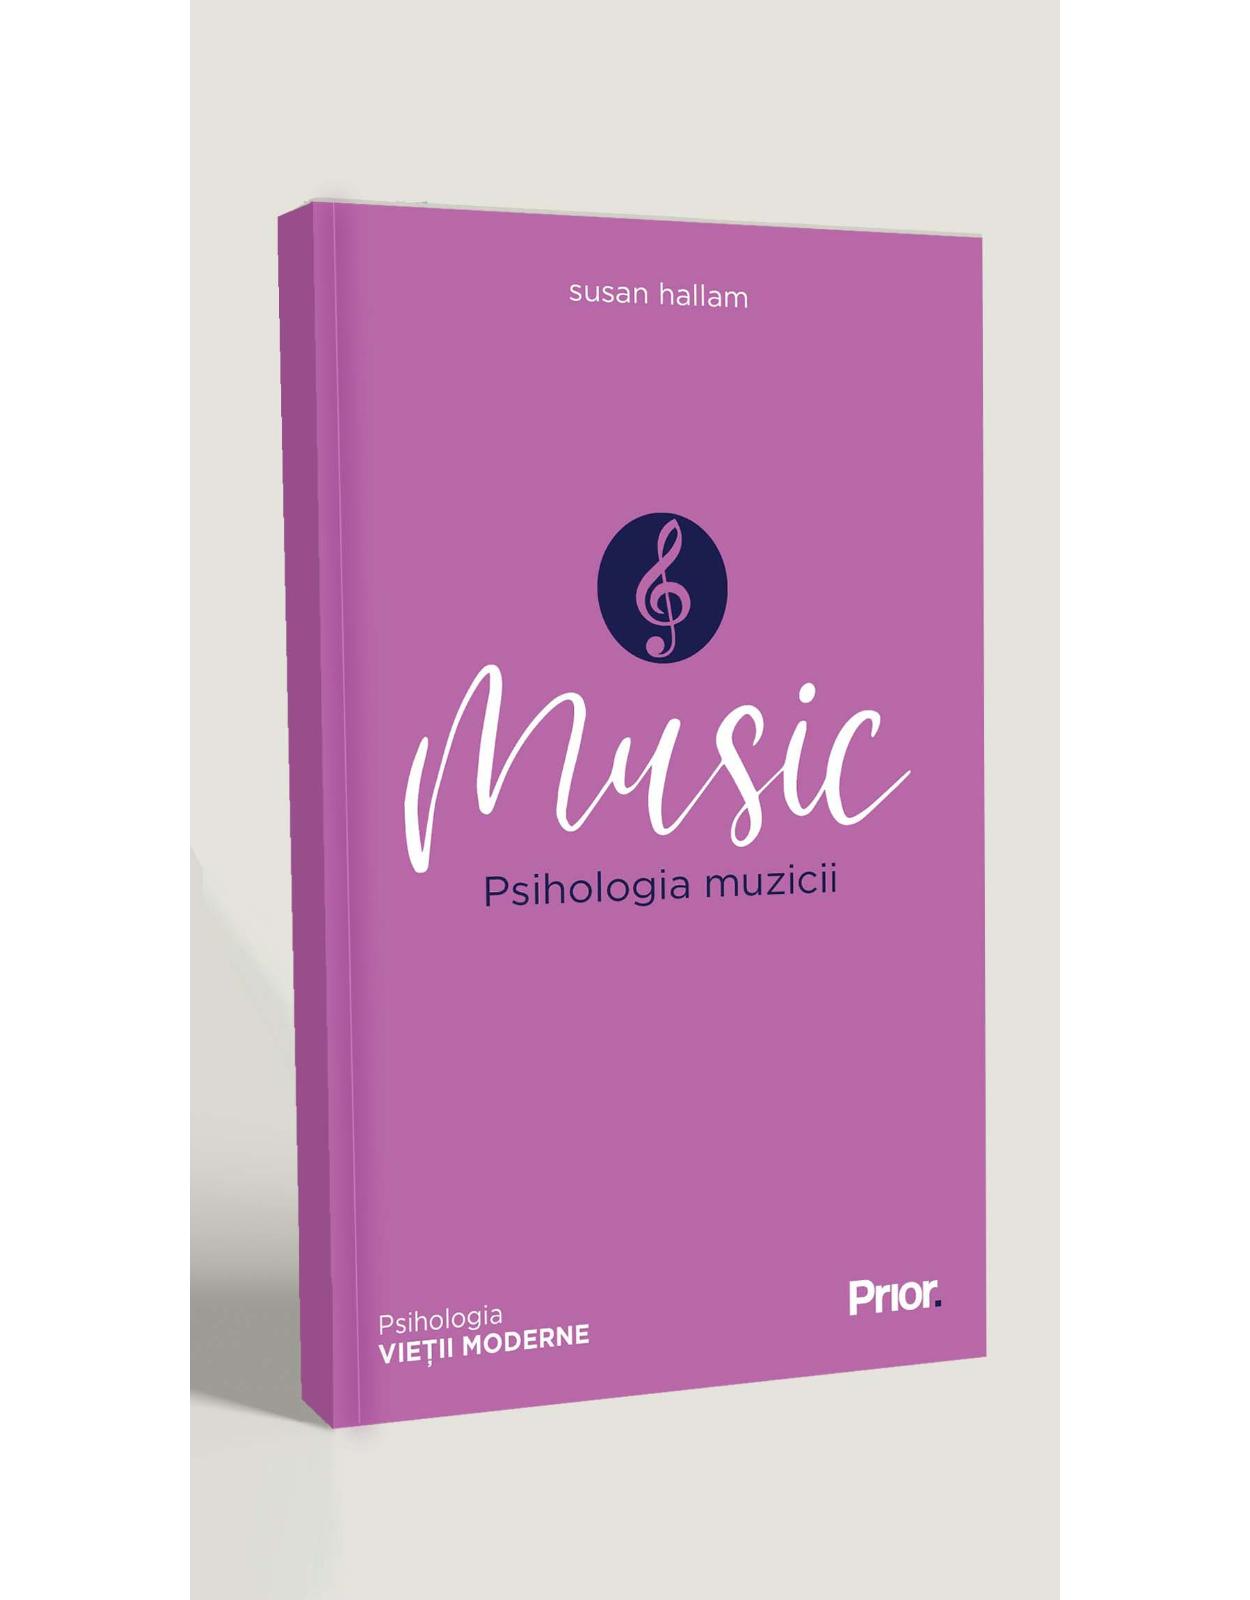 MUSIC. Psihologia muzicii